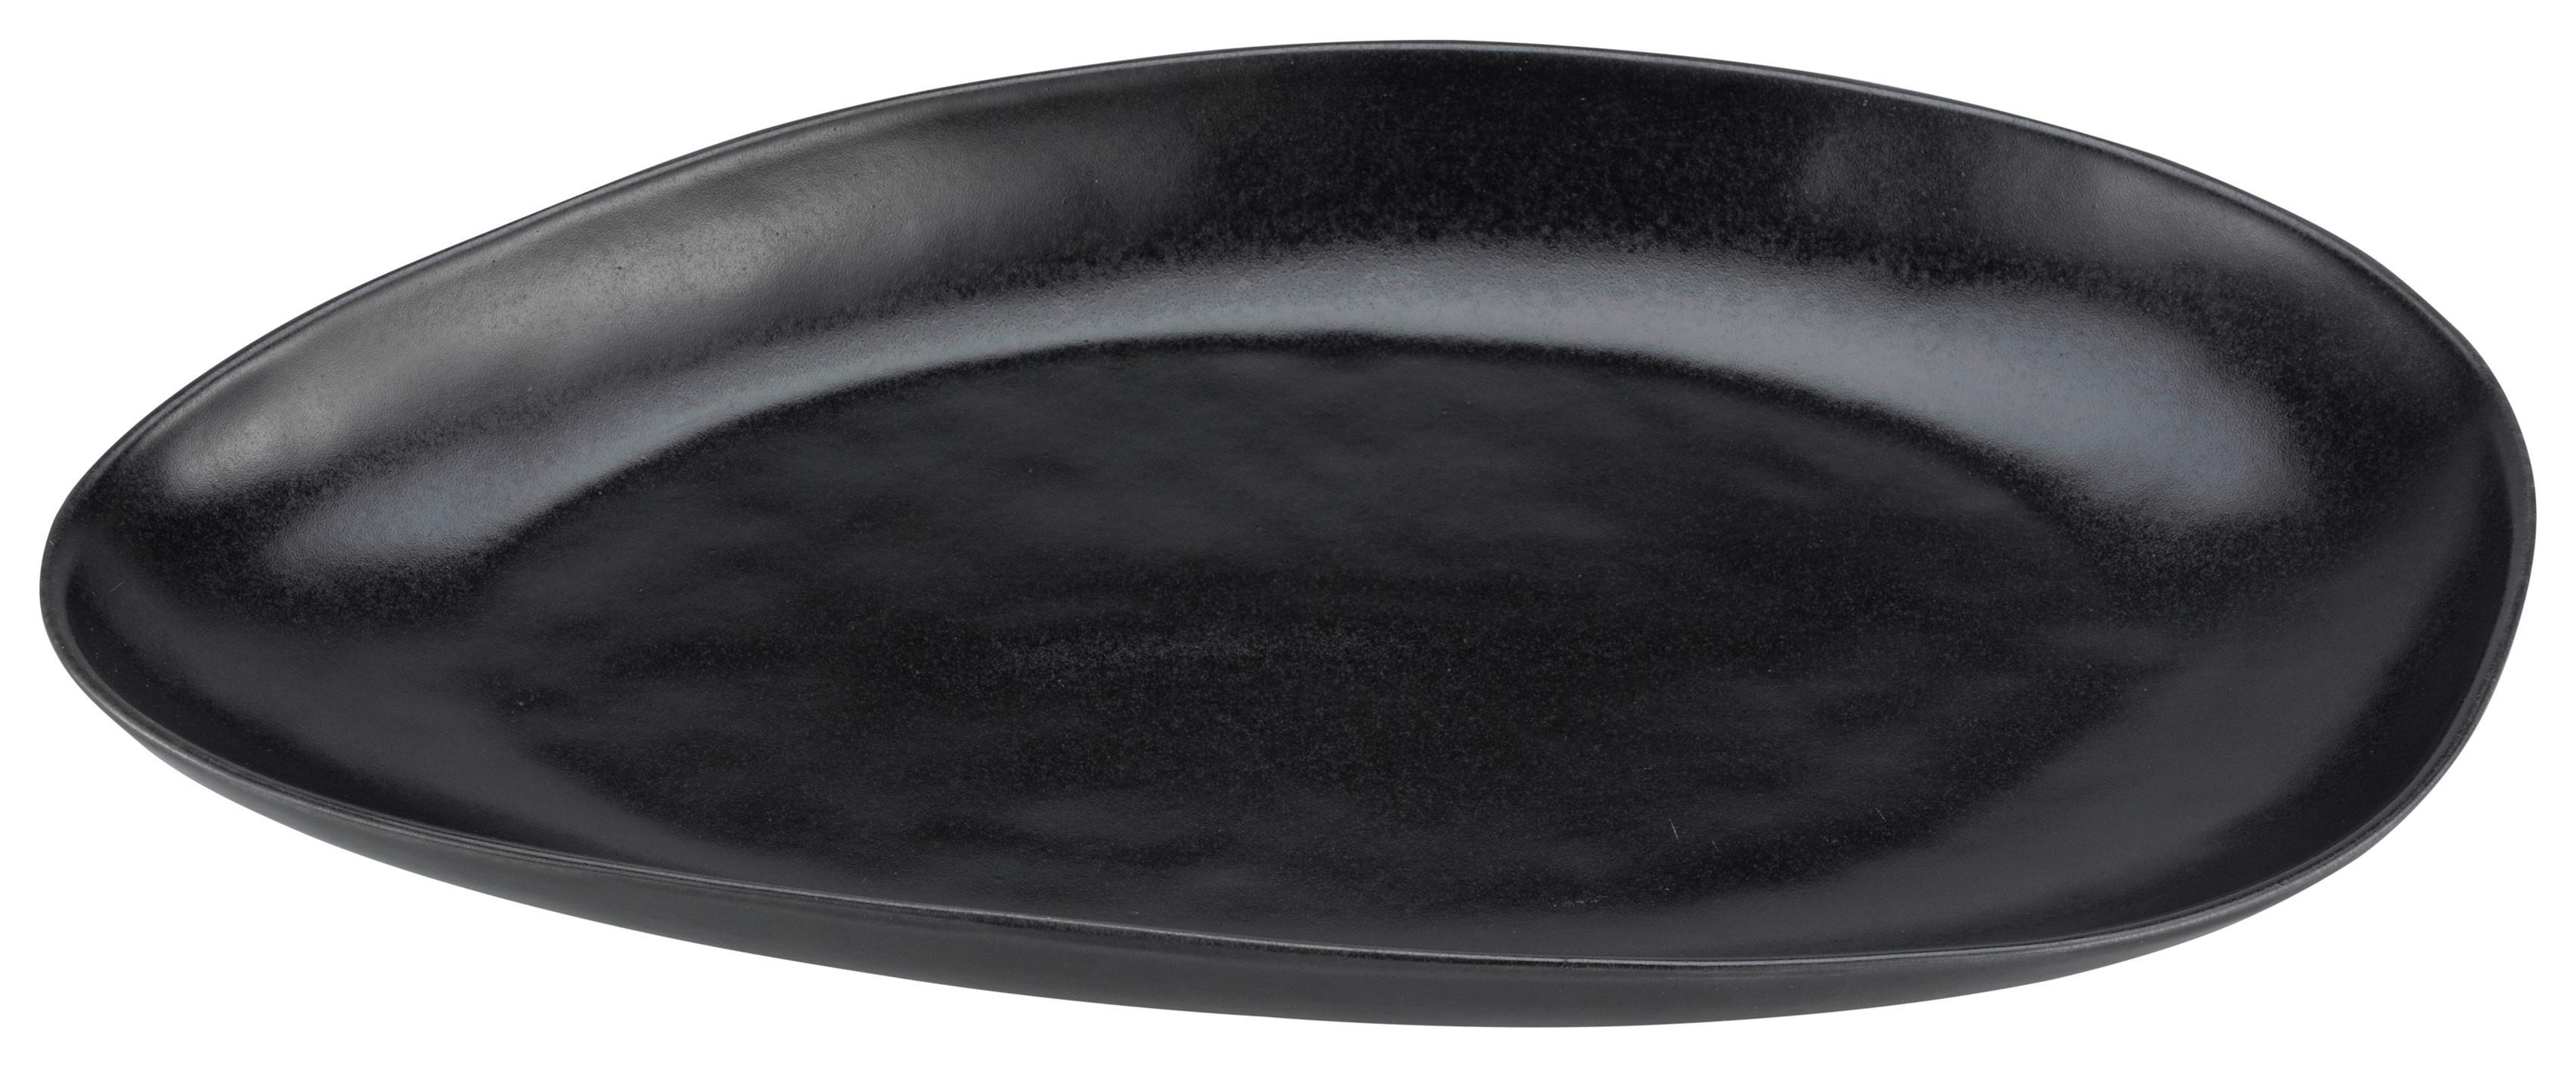 Servírovacia Tácka Gourmet-Xl, Ø: 39cm - čierna, Moderný, keramika (39/22/4cm) - Premium Living